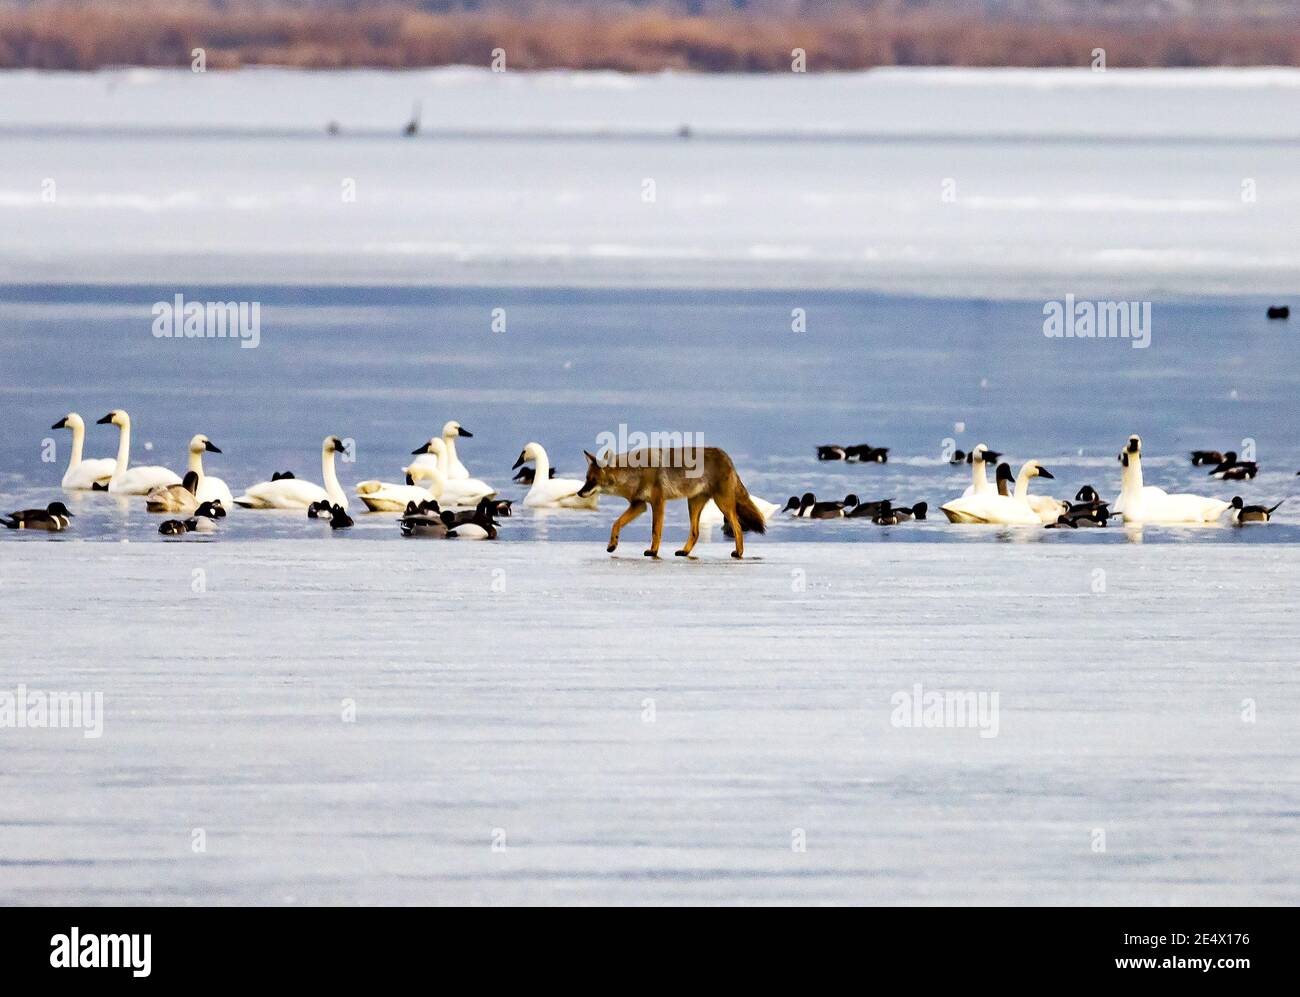 Ein hungriger Kojote (Canis latrans) stielt einige Tundra Swans (Cygnus columbianus) im Wasser ein paar Meter entfernt in Farmington Bay WMA, Utah, USA. Stockfoto